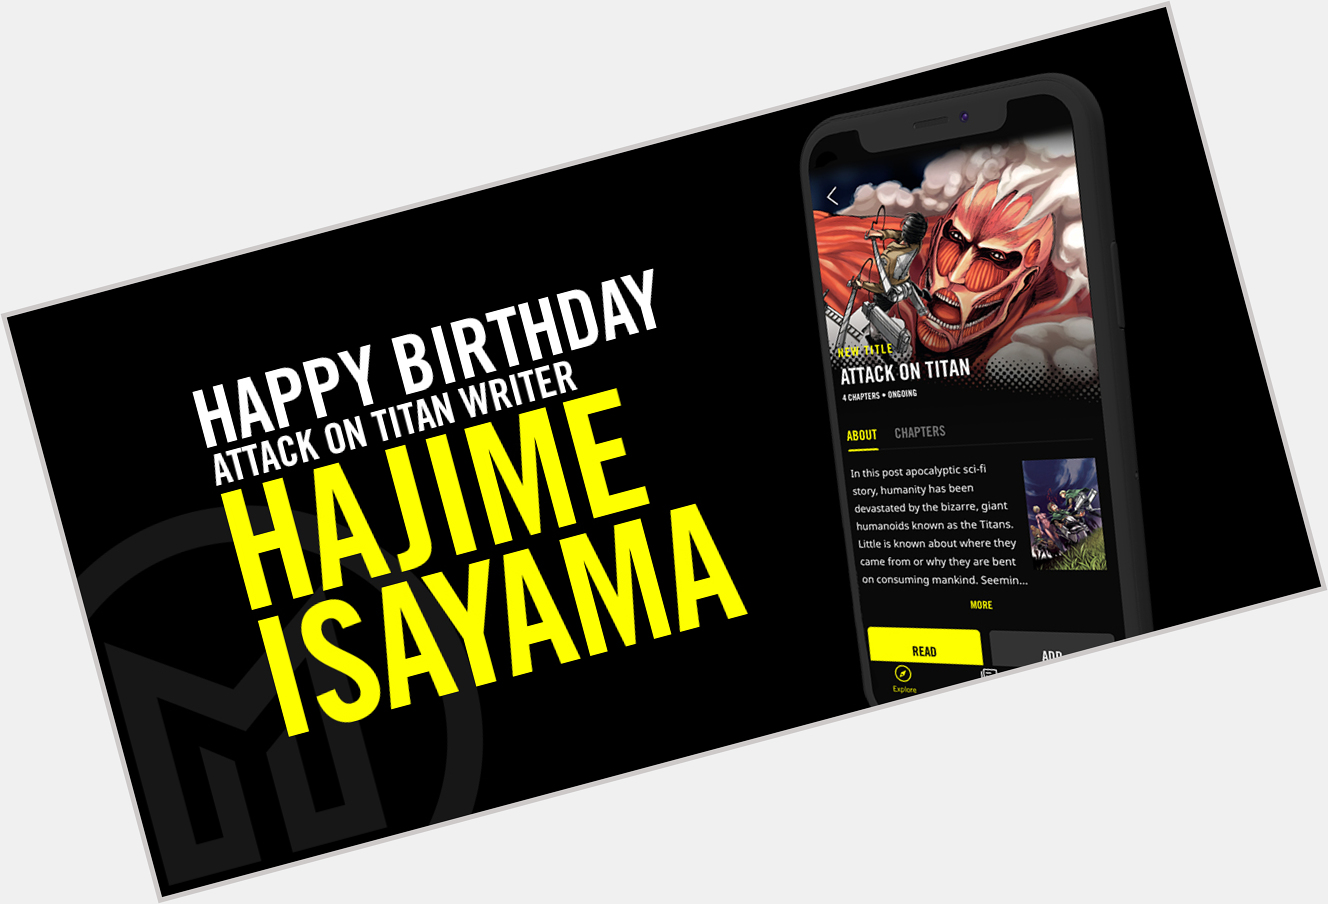 Happy Birthday to Hajime Isayama, the author of Attack on Titan! 